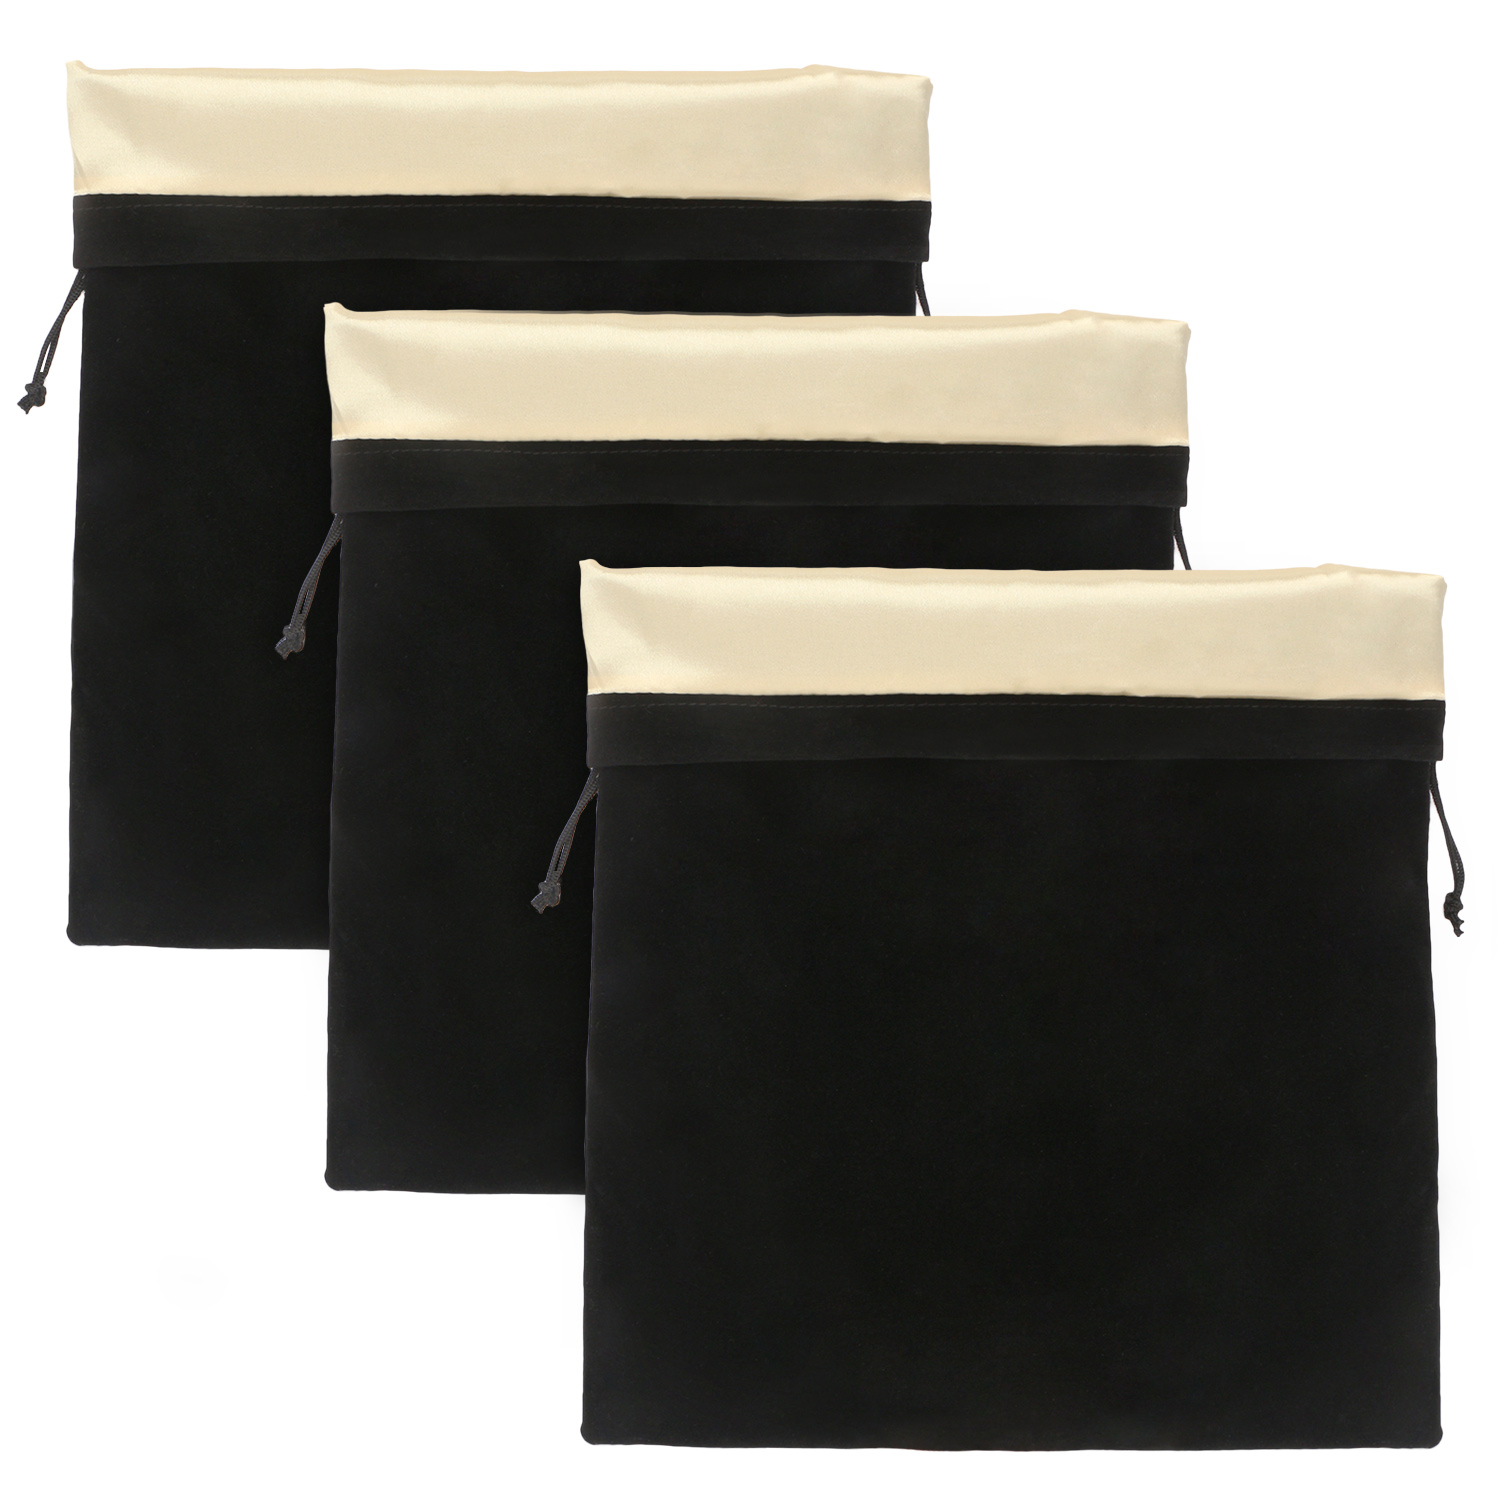 Segbeauty Hair Dryer Bags – Pack Of 3